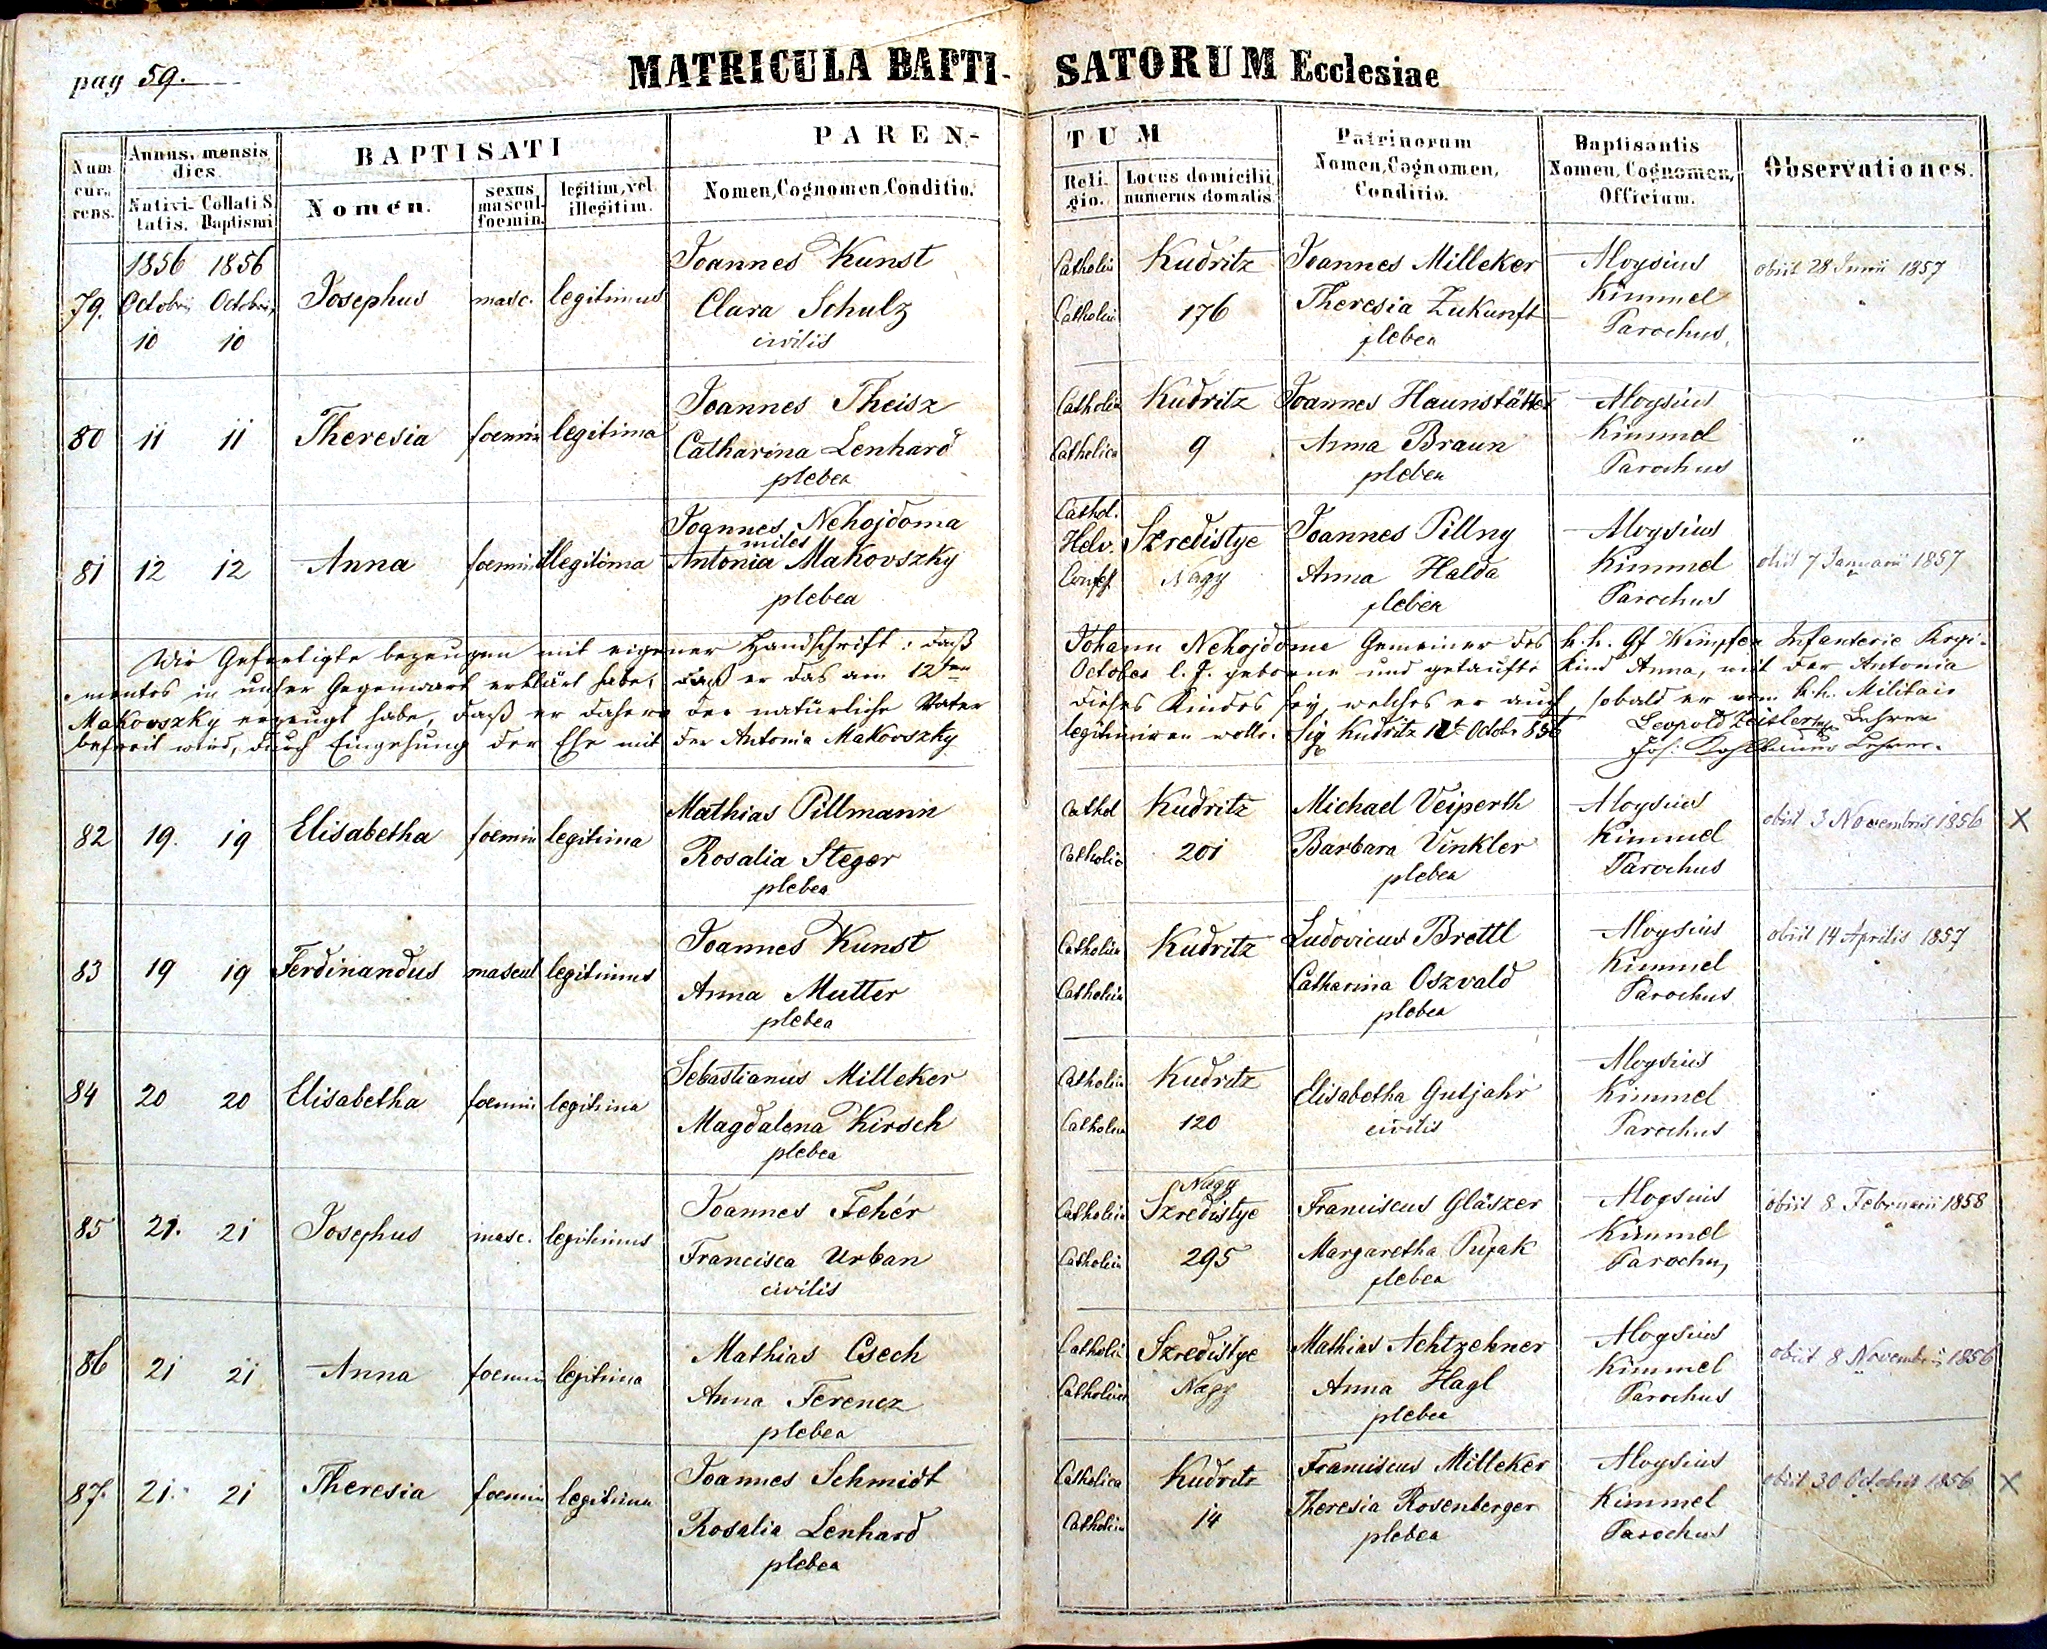 images/church_records/BIRTHS/1852-1870B/059